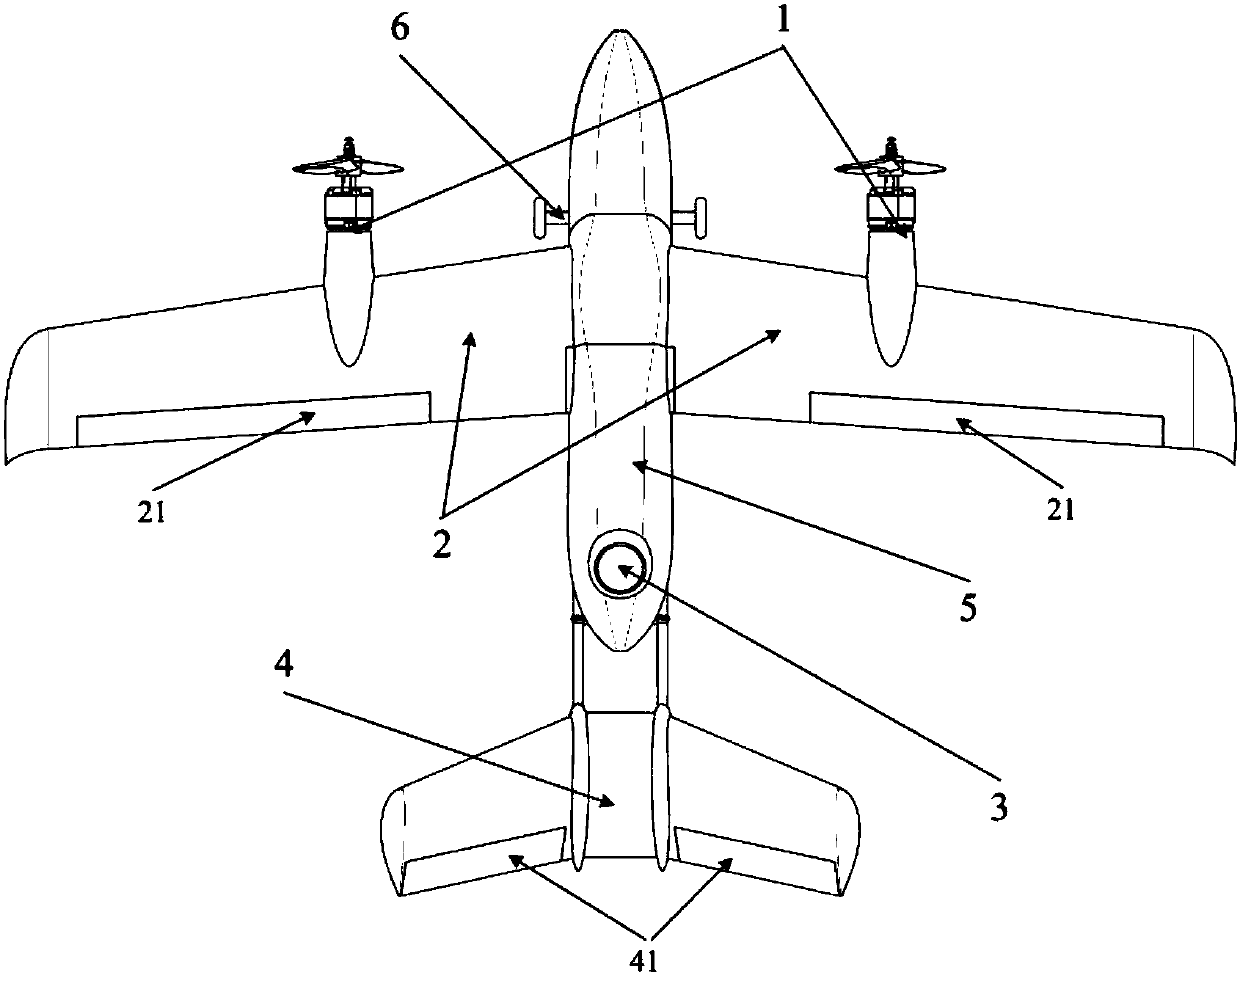 High-speed high-efficiency tilt wing unmanned aerial vehicle